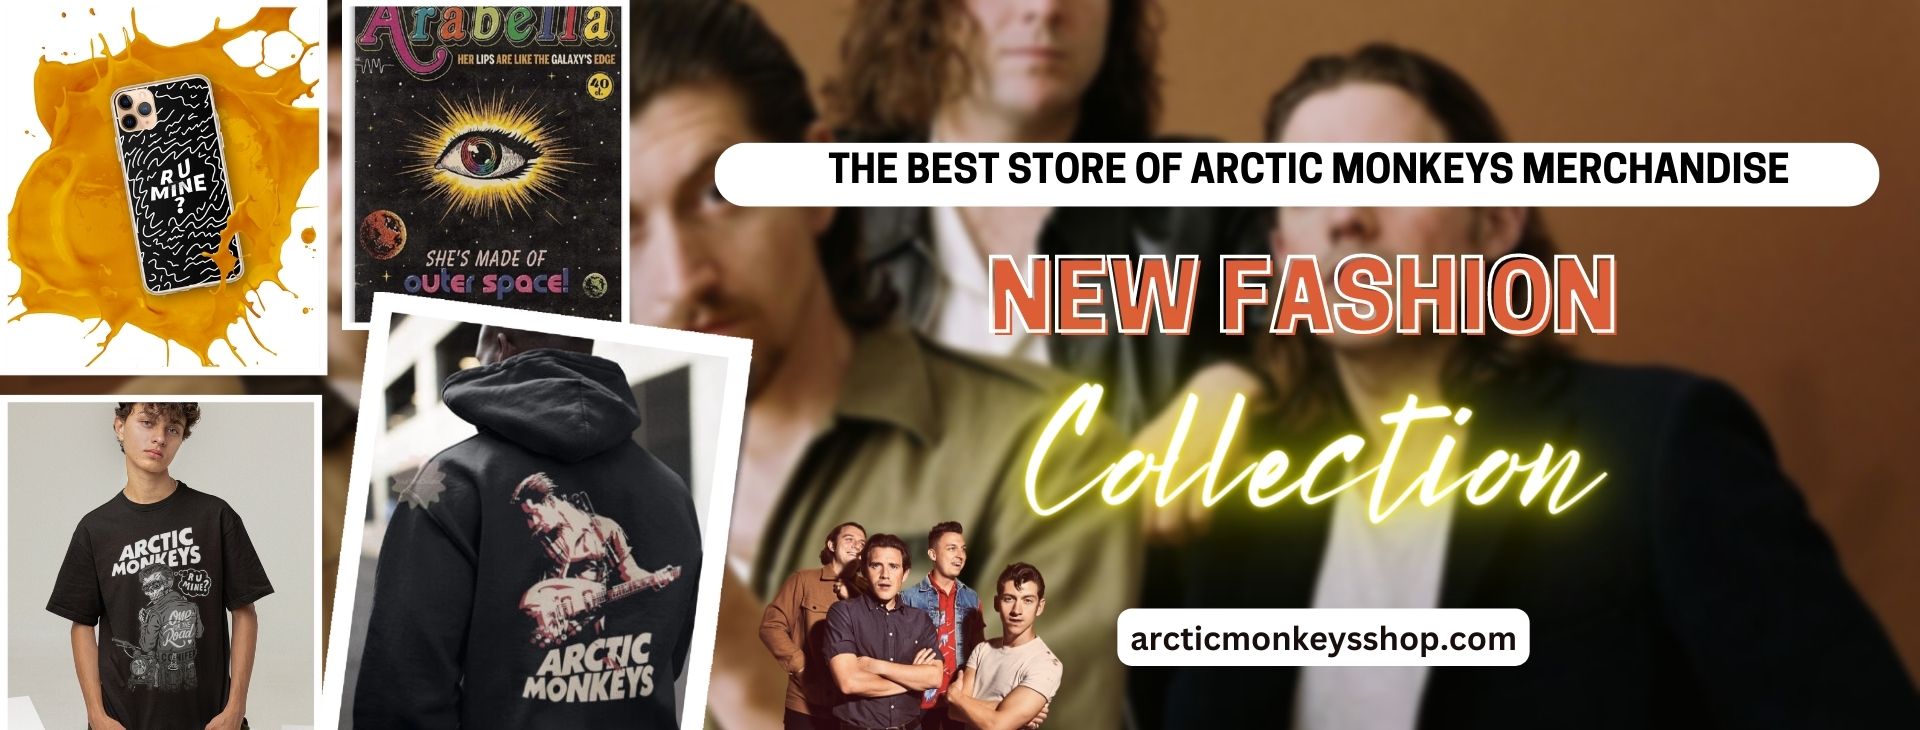 No edit arcticmonkeysshop.com banner - Arctic Monkeys Shop